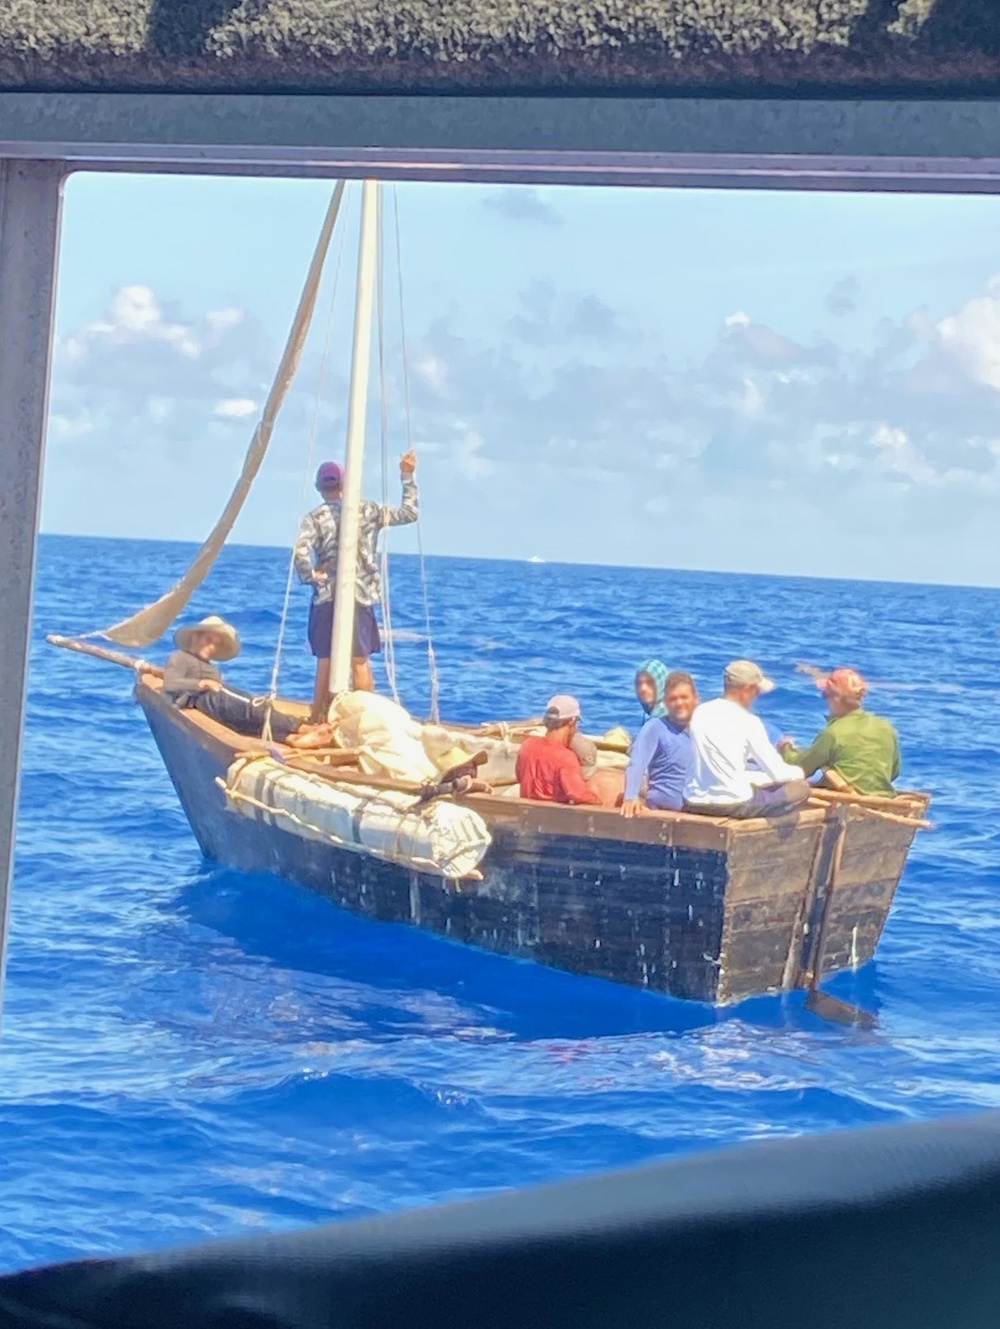 Coast Guard repatriates 46 people to Cuba